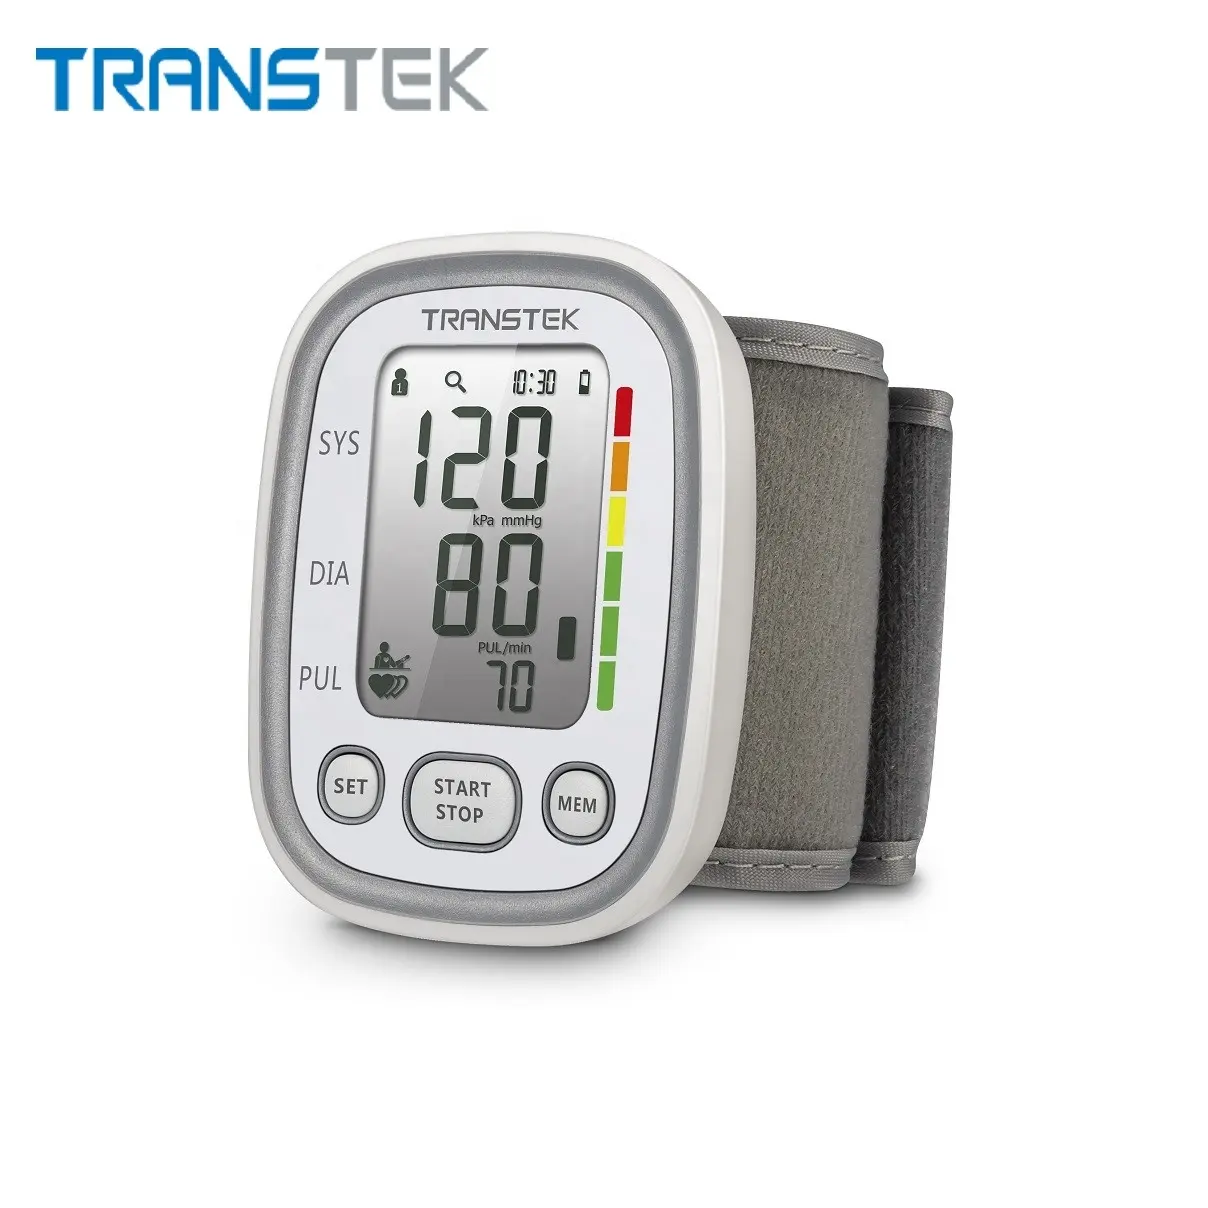 Transtek portable BP apparatus smart digital wrist blood pressure monitor BP Machine Price